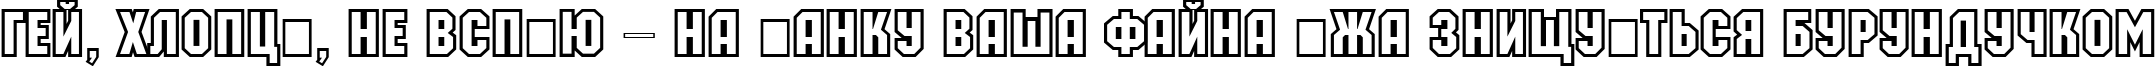 Пример написания шрифтом a_MachinaOrtoClg Bold текста на украинском